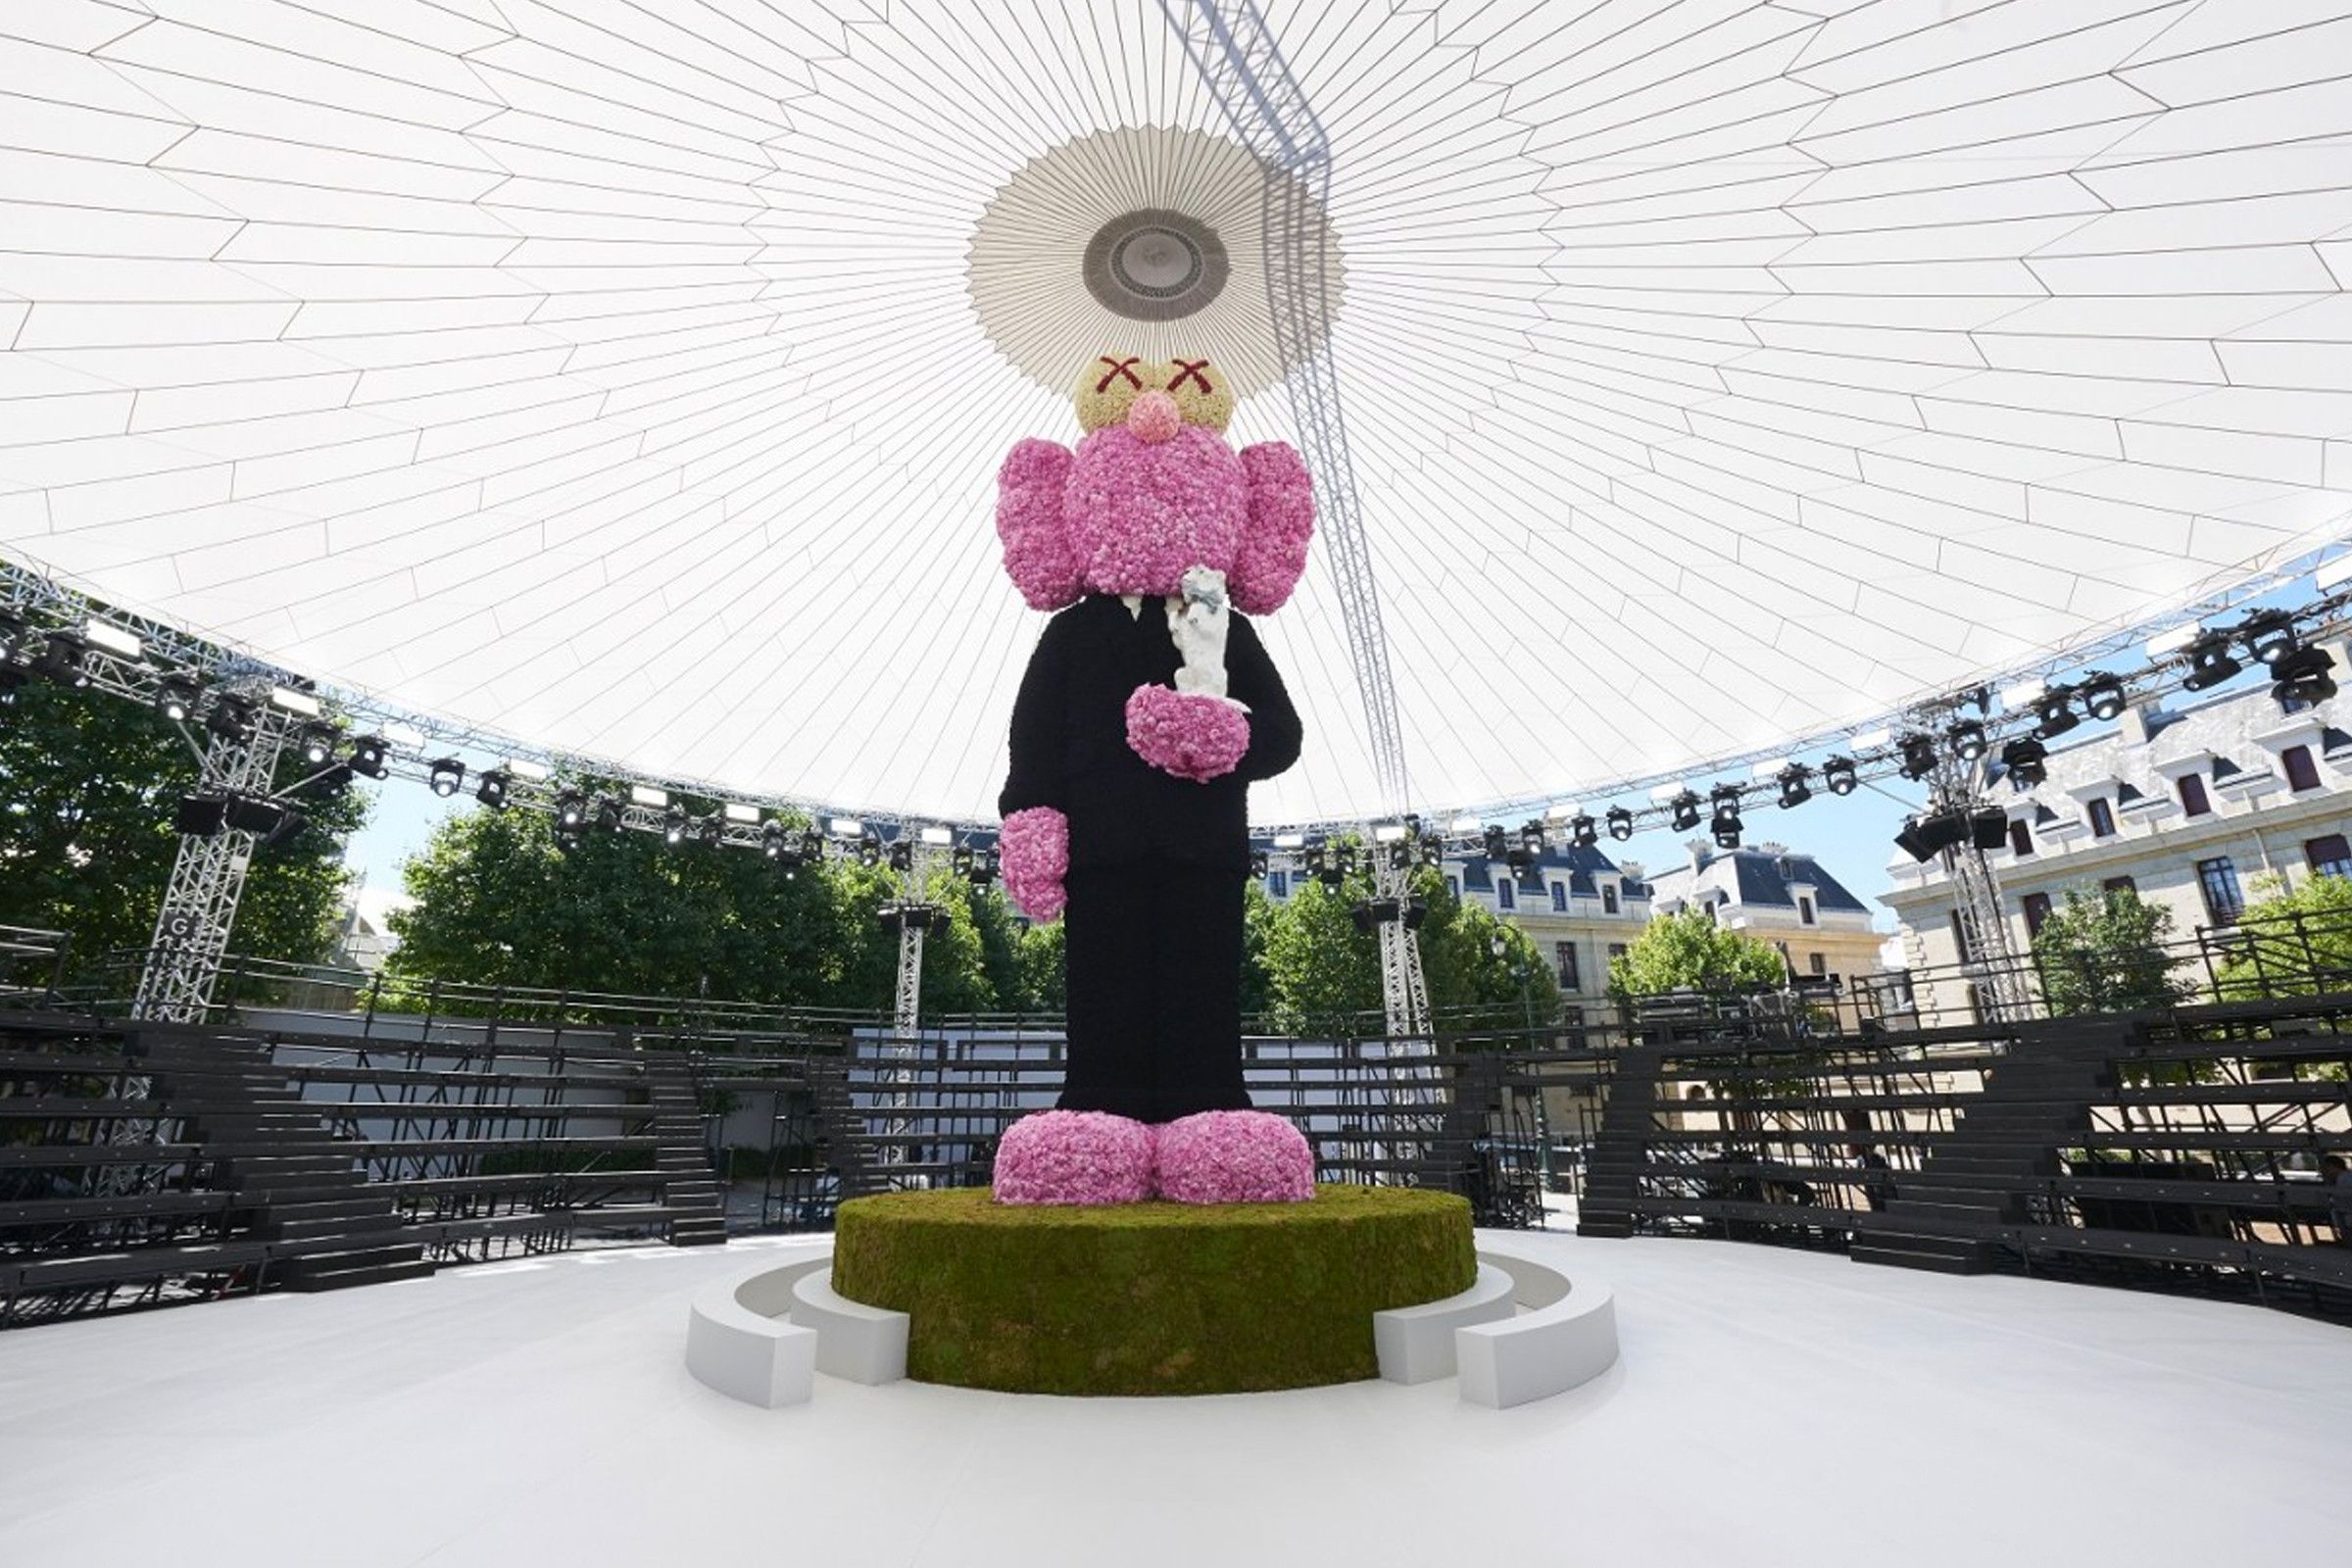 KAWS x Dior Men's Companion statue as part of Dior Men's Spring/Summer 2019 collection